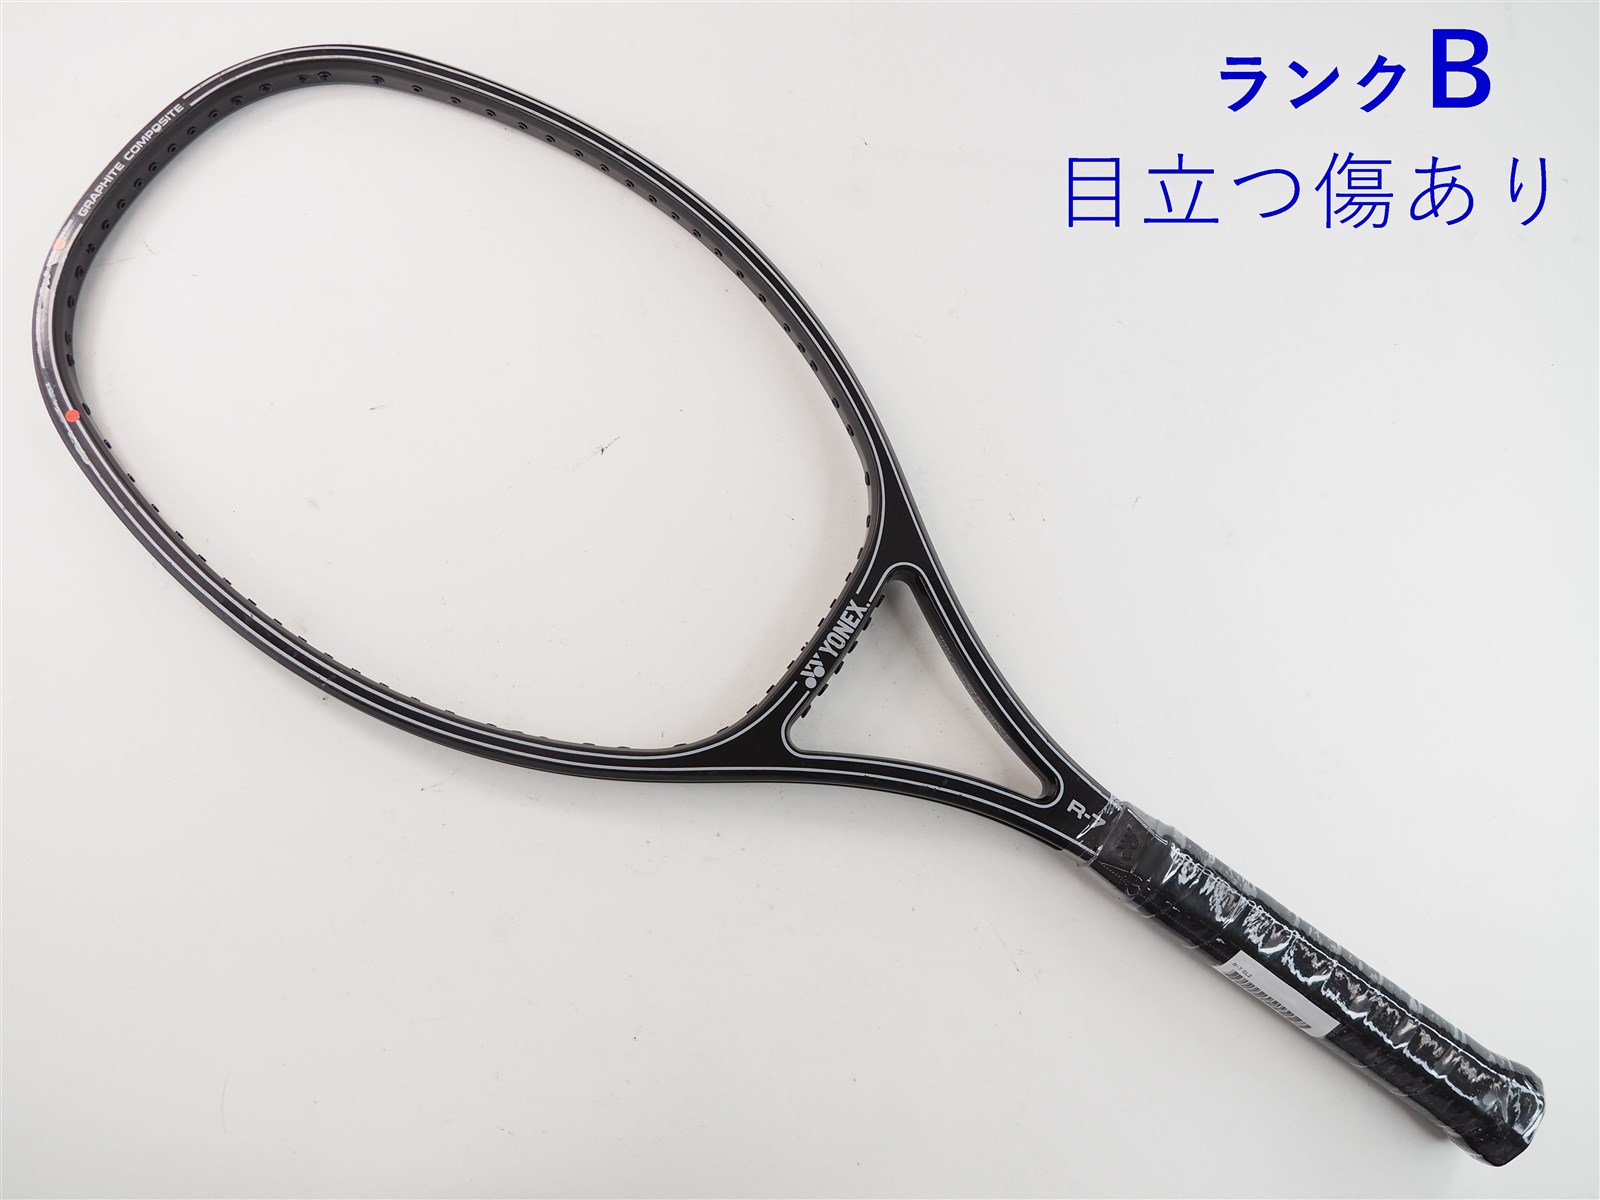 【YONEX】R-70 PRO 松岡修造モデル グリップサイズ2